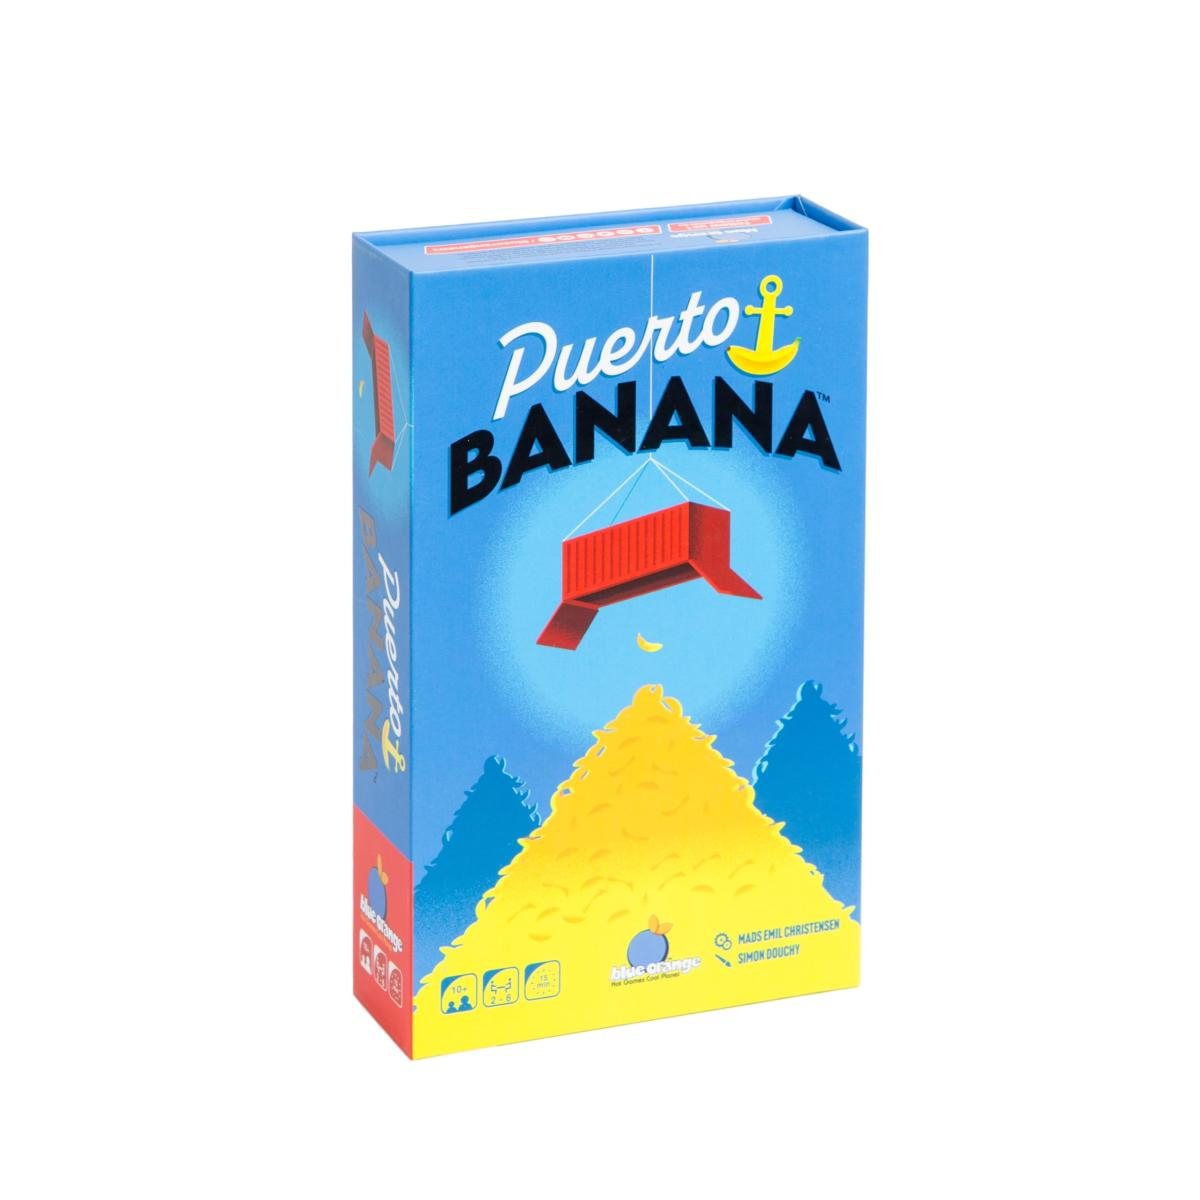 Puerto banana - jeu d encheres